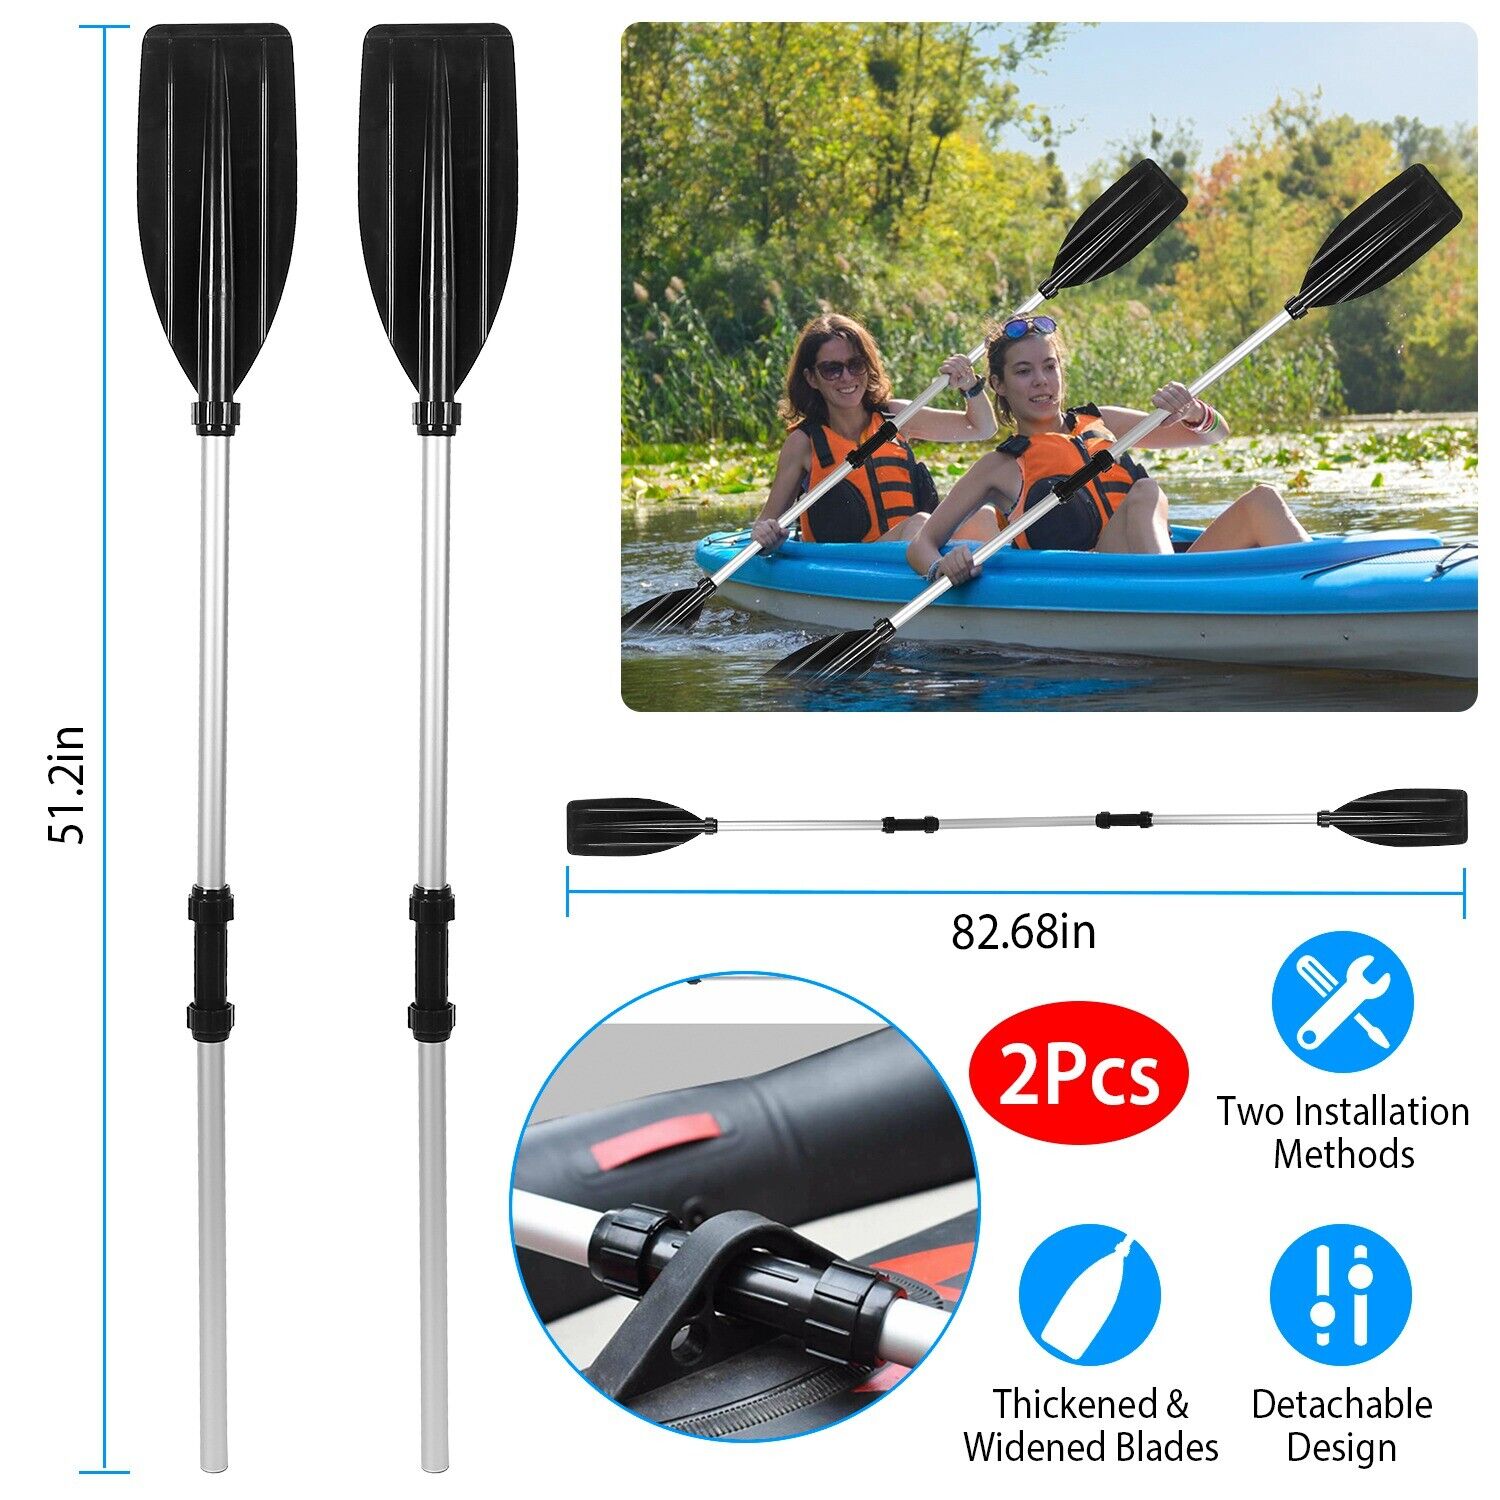 2Pcs Kayak Paddles Aluminum Alloy Detachable Canoe Paddle Boat Oars 82.68inch LakeForest Does not apply